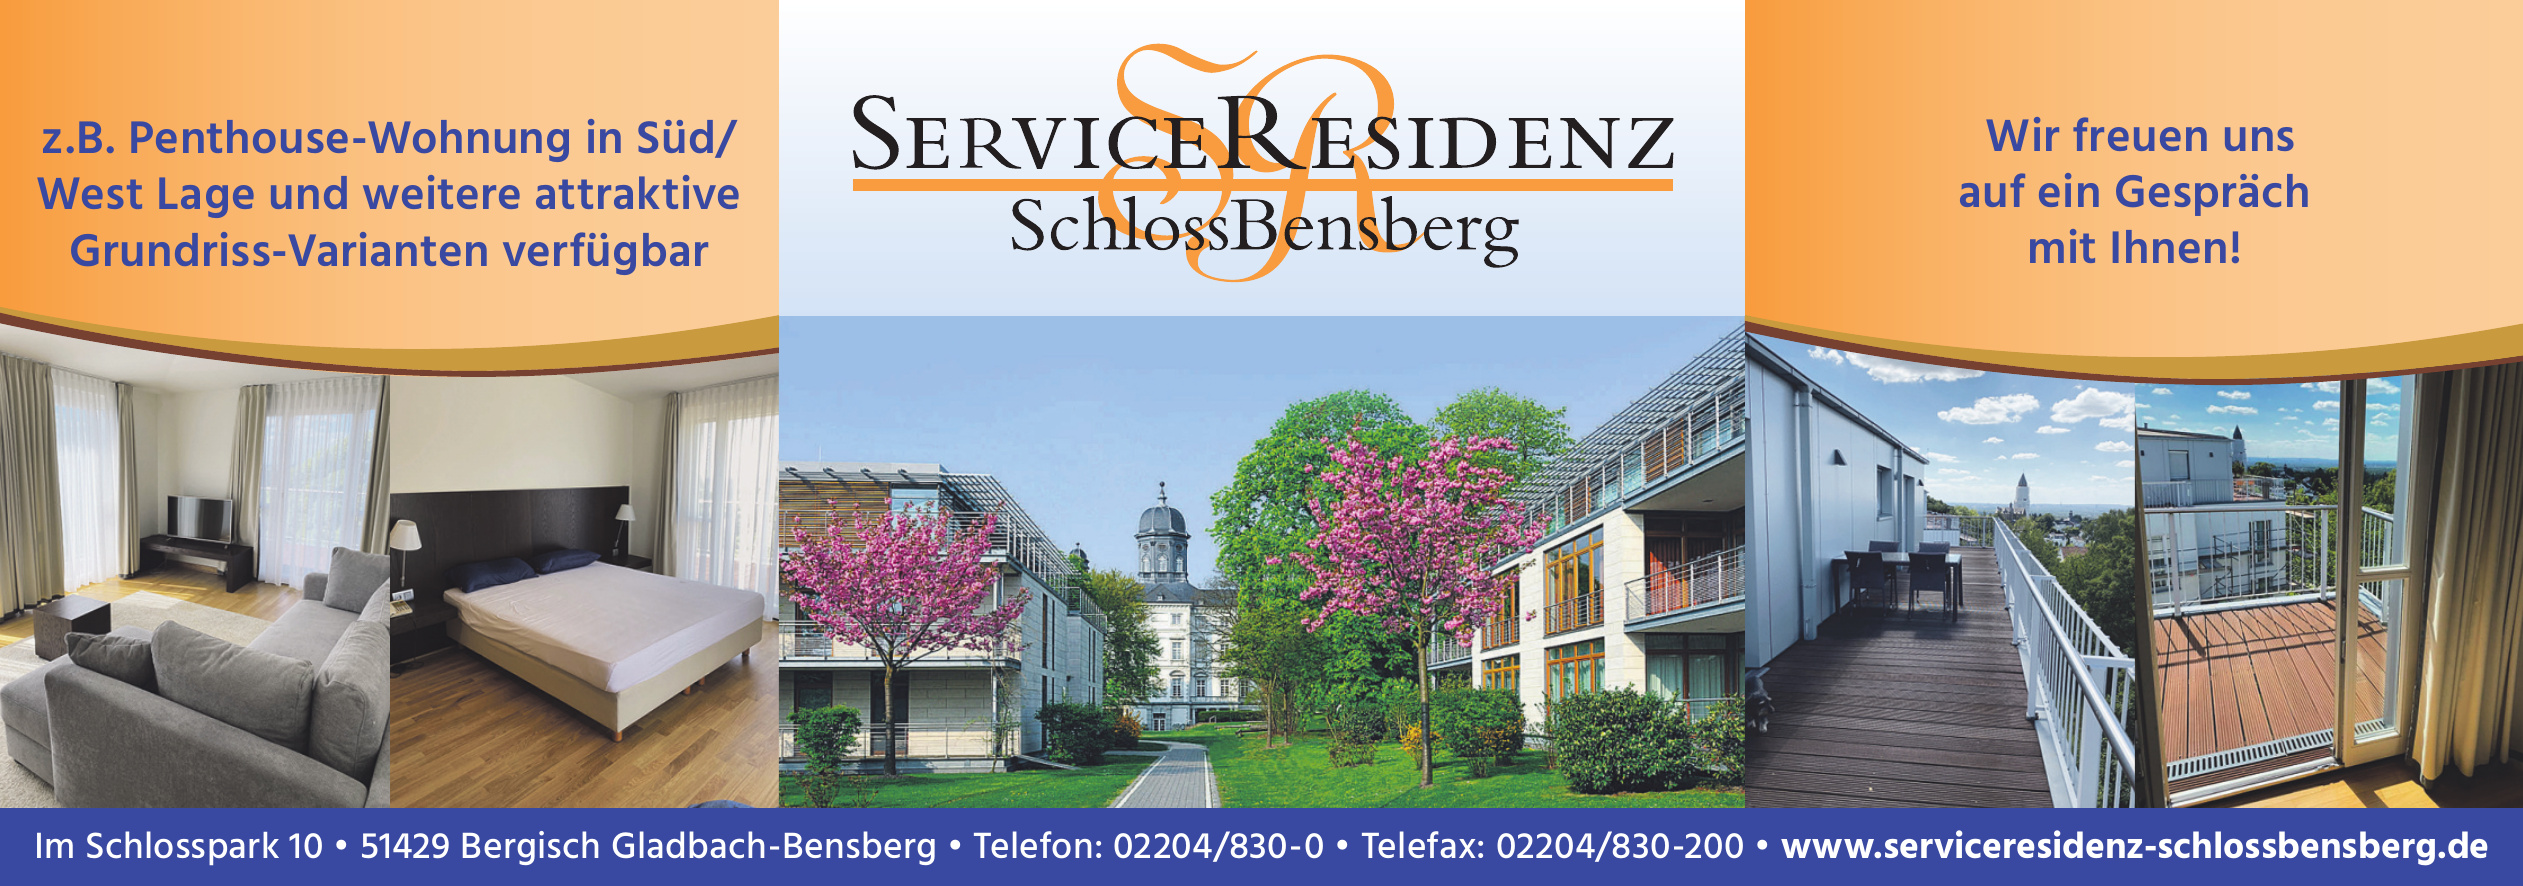 Service Residenz Schlossbensberg